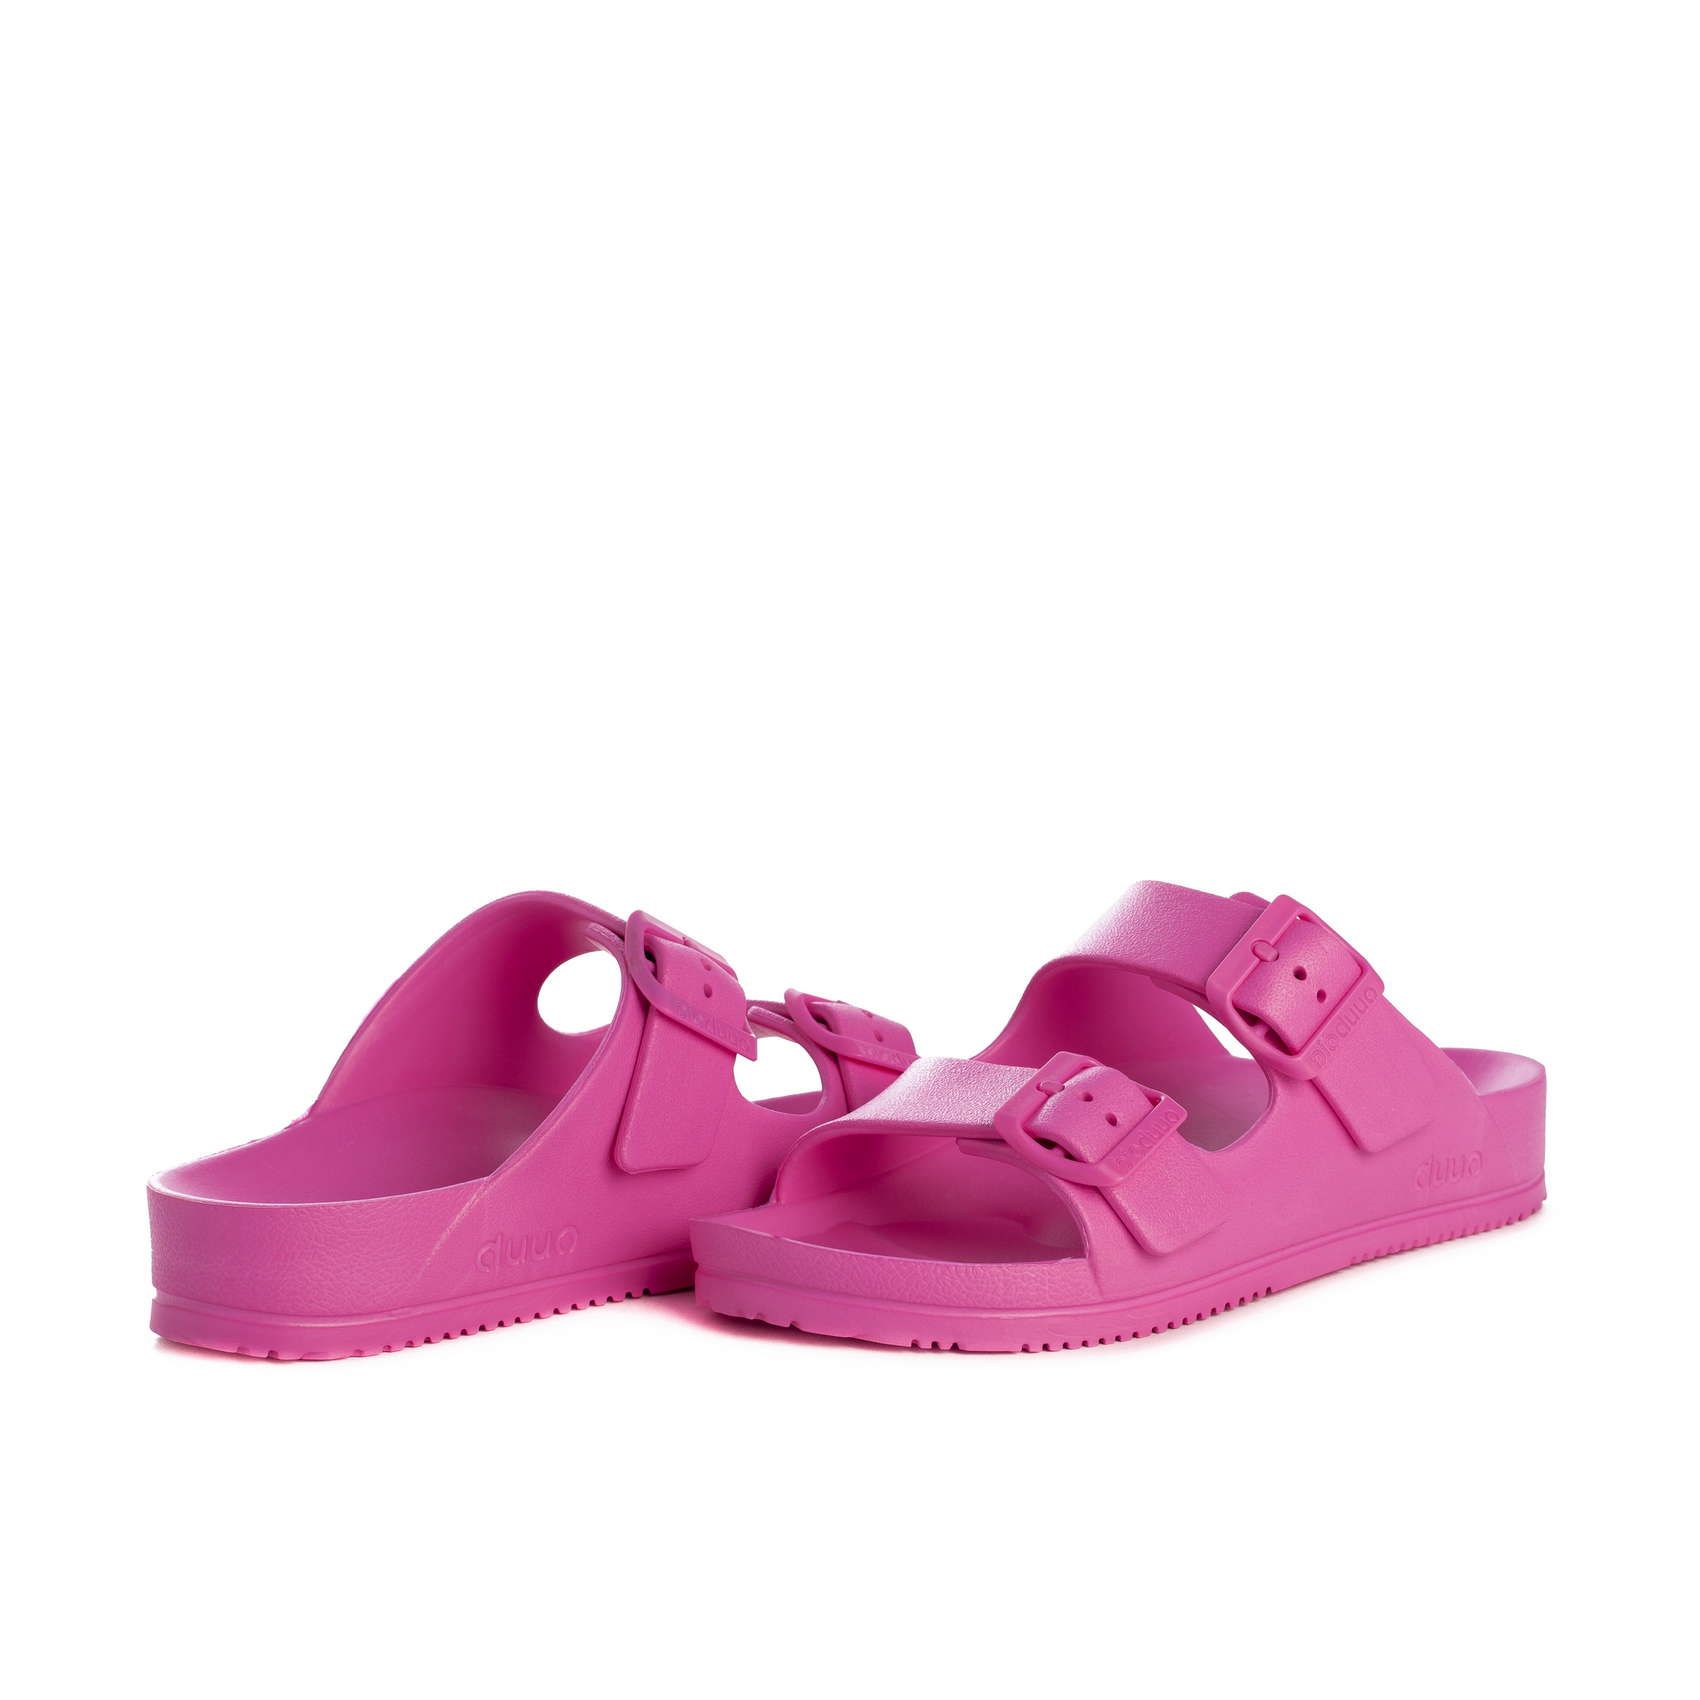 Flat sandal block color in pink